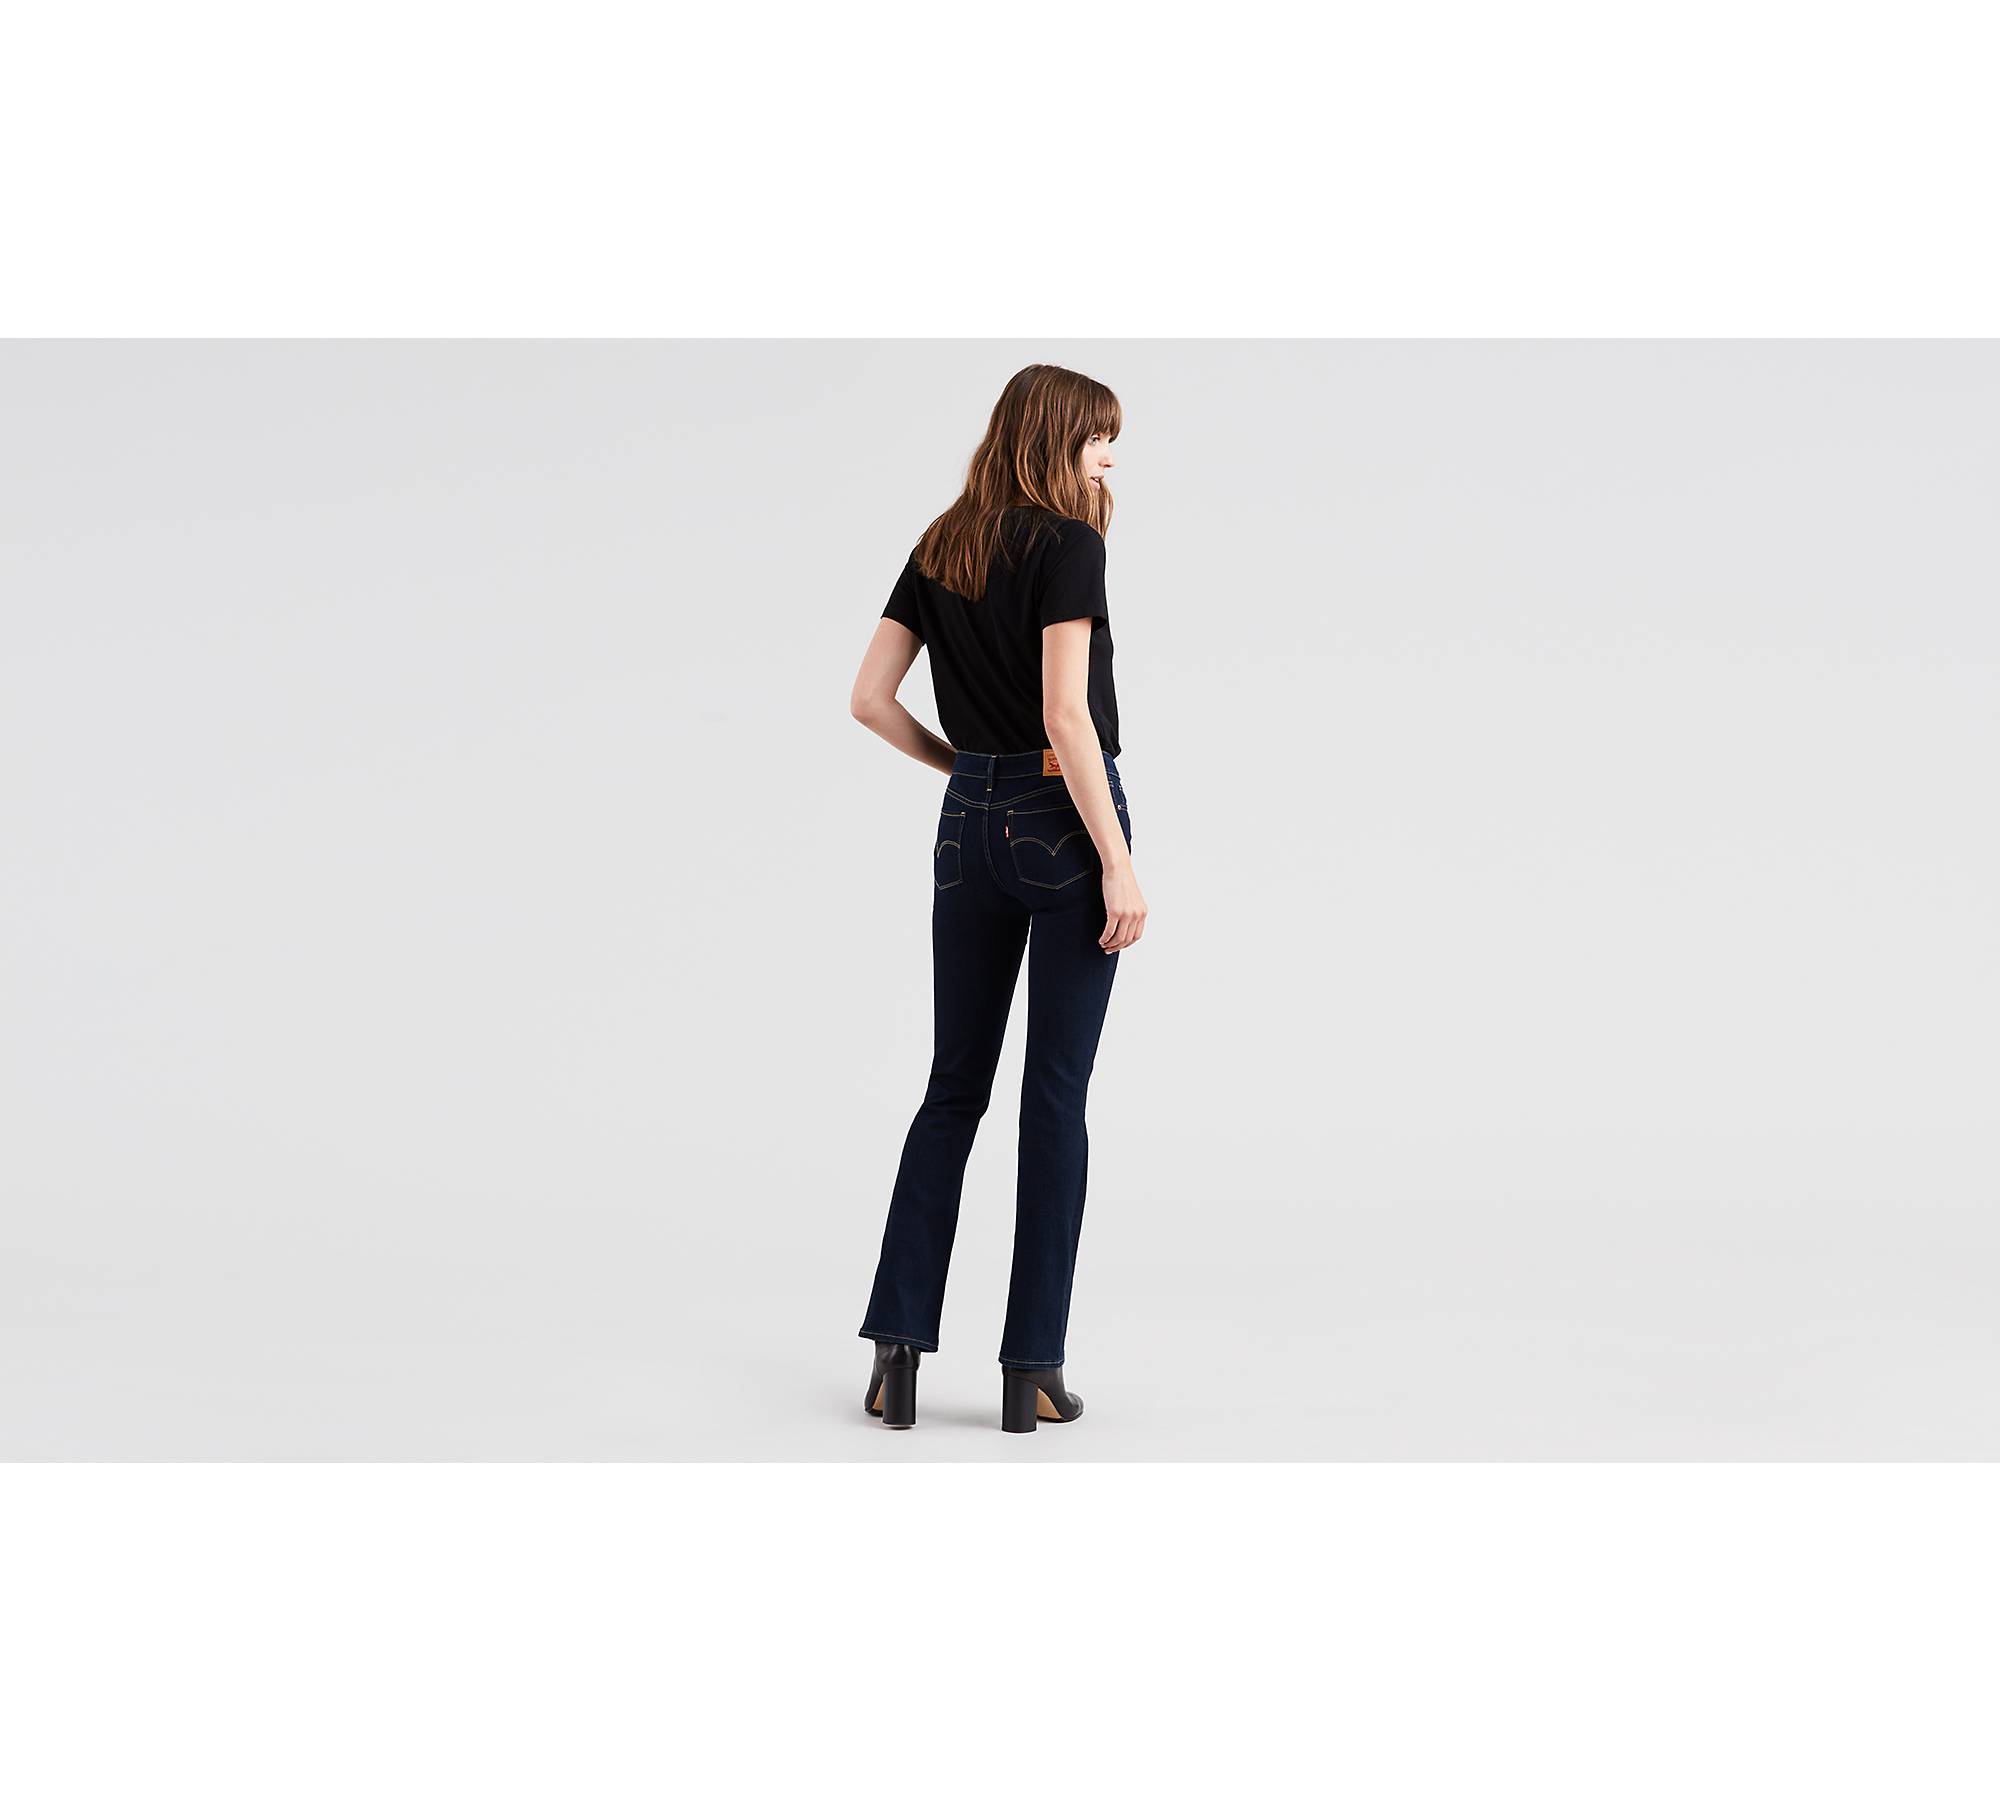 715 Bootcut Women's Jeans - Dark Wash | Levi's® US